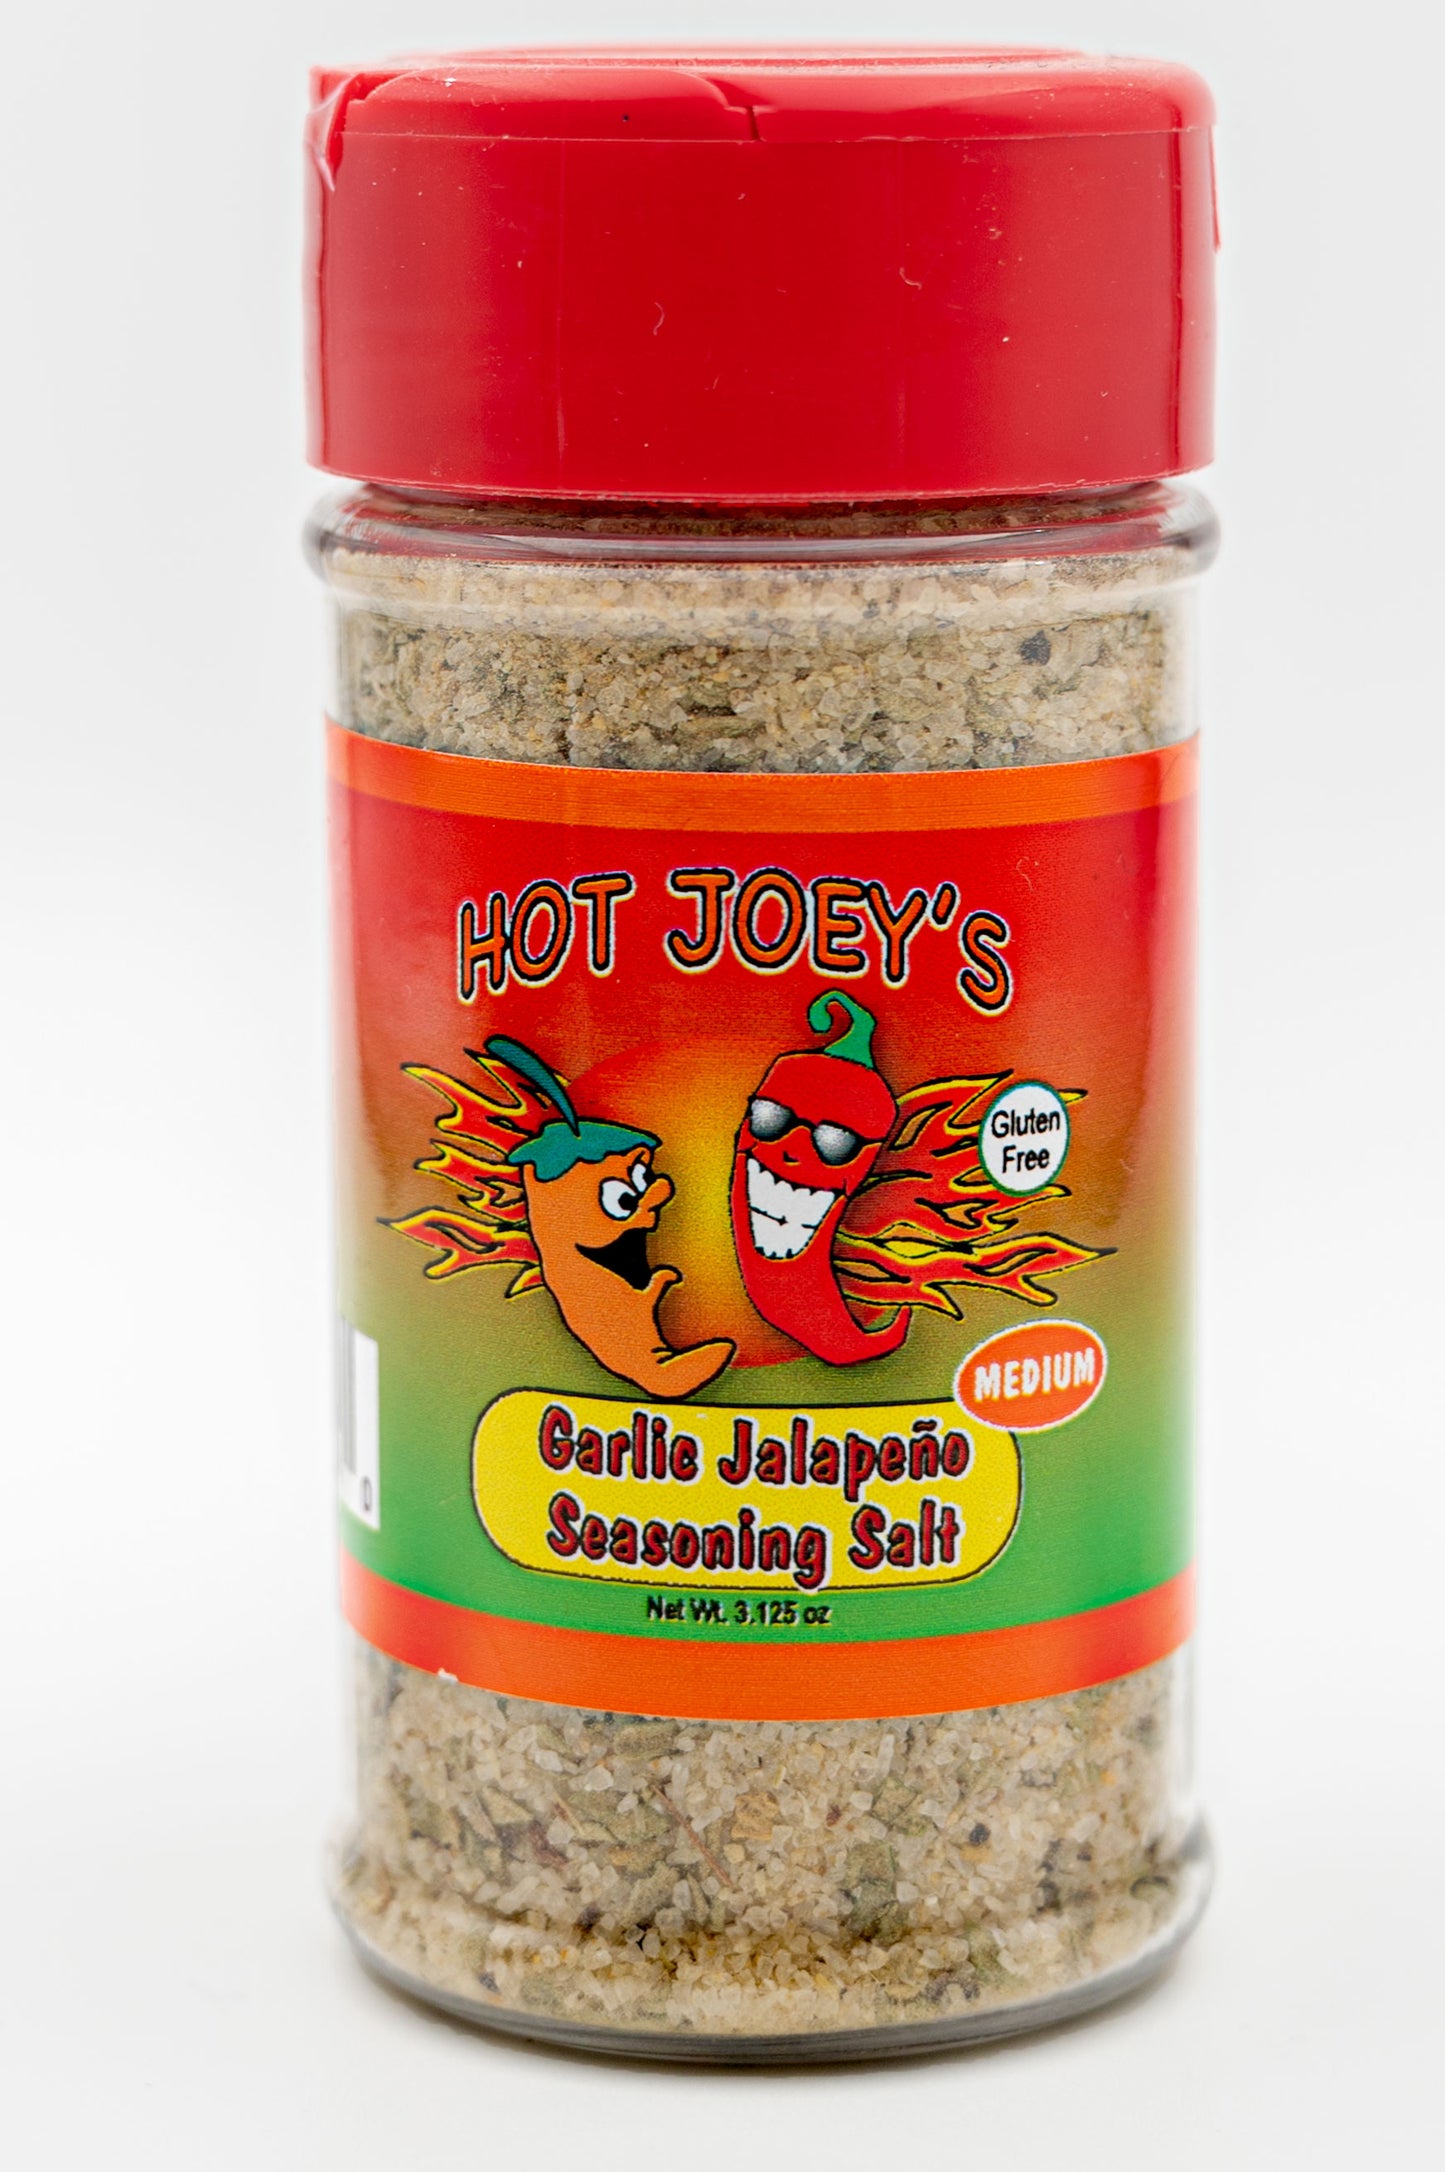 Garlic Jalapeno Seasoning Salt (Net Wt: 3.125oz)